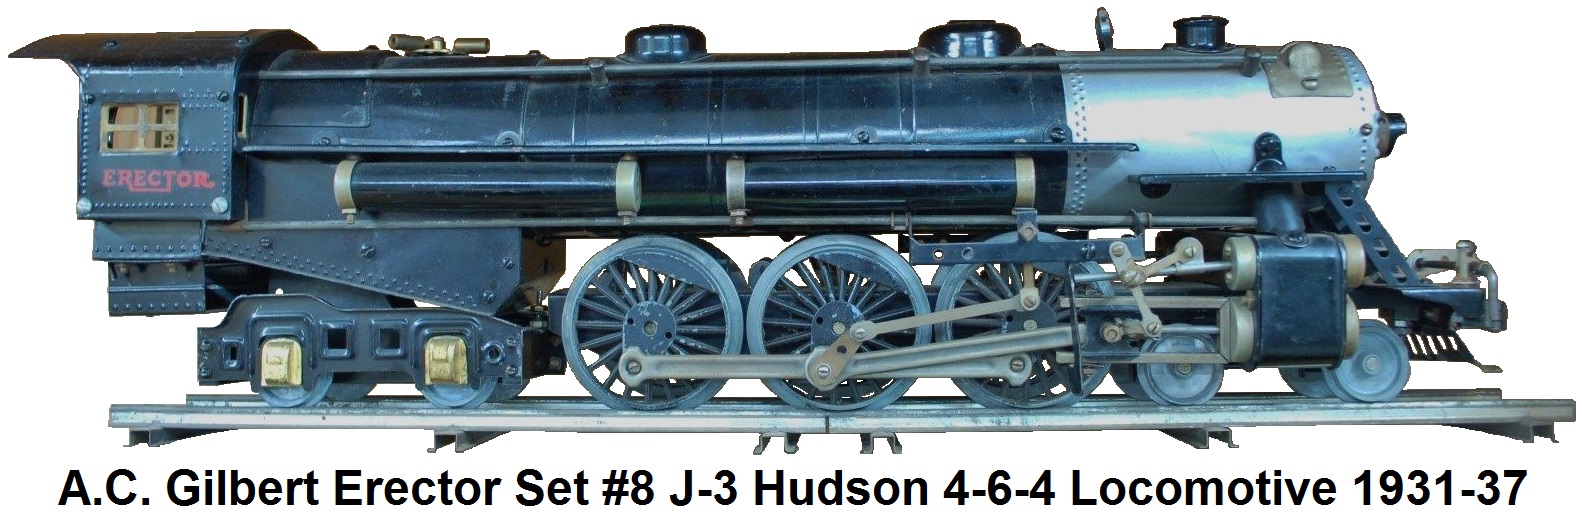 A. C. Gilbert 4-6-4 J-3 Hudson Erector Set Model steam locomotive from 1930